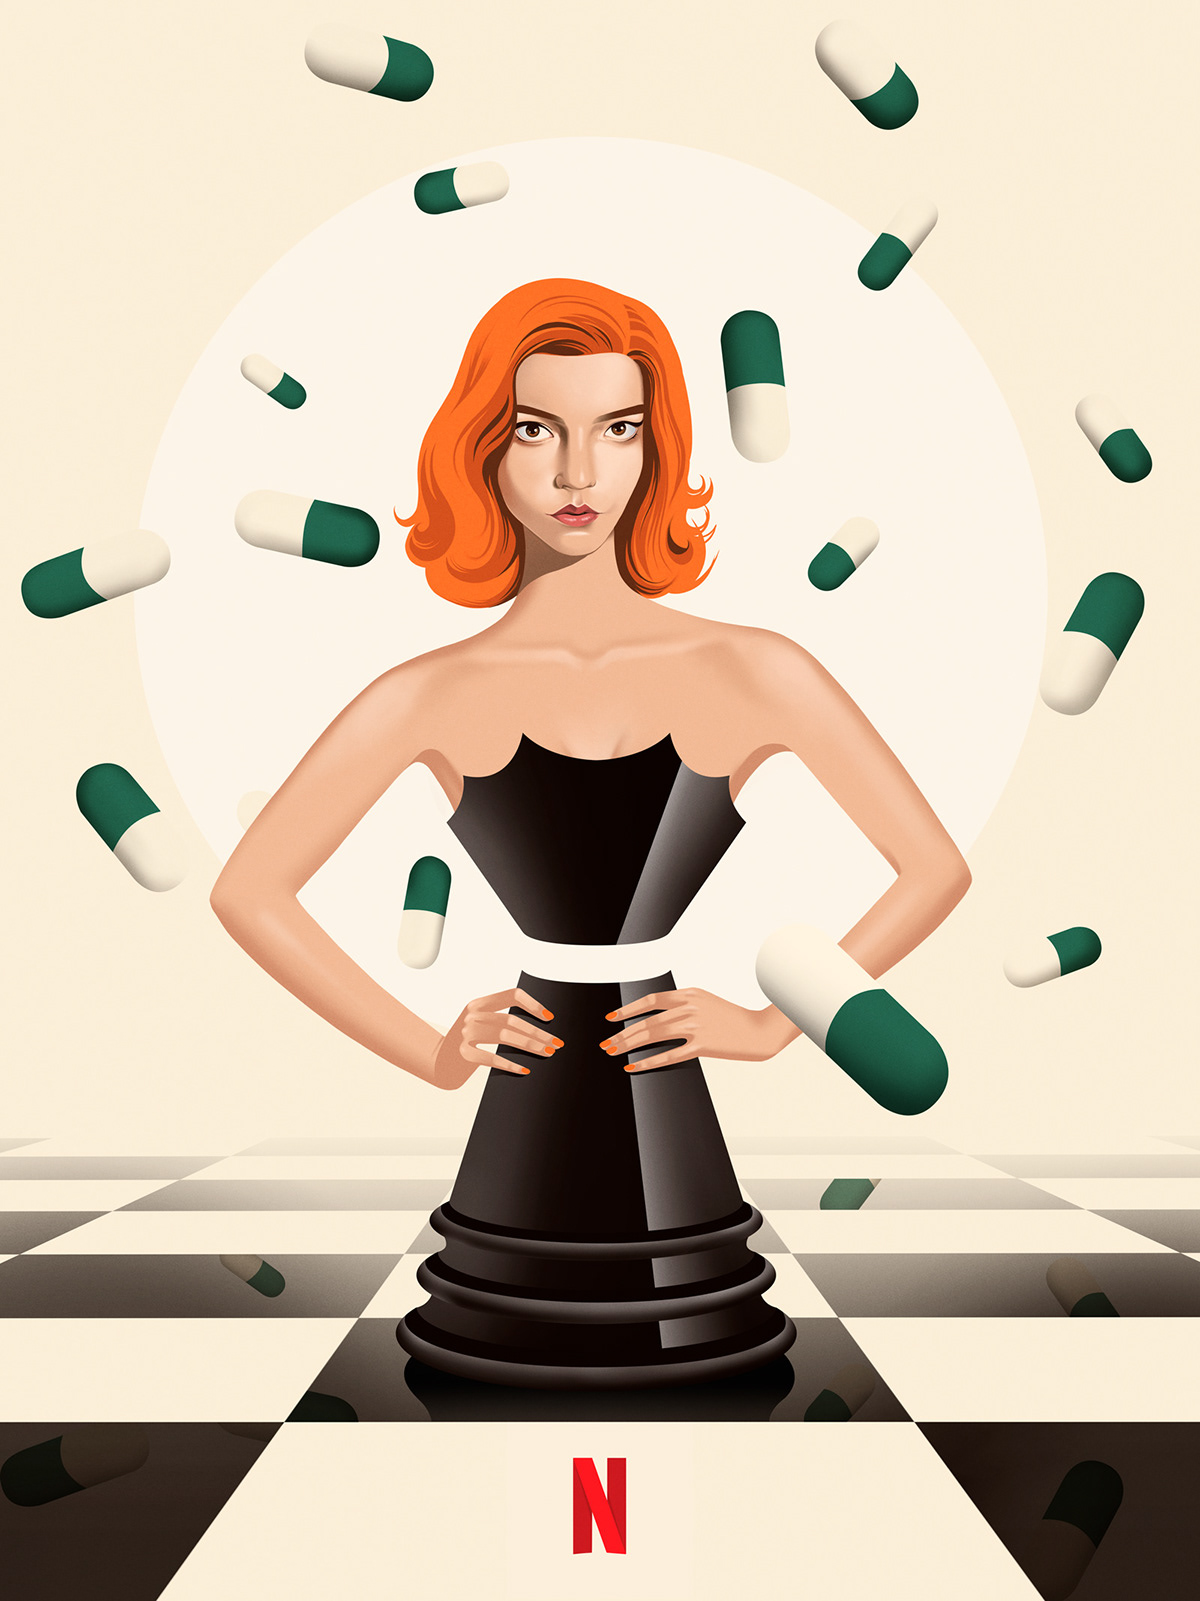 anxiety pills Asya Taylor-Joy chess game illustration portrait Netflix tv series Photoshop Digital art procreate digital art queen of chess queen's gambit SemiRealism illustration